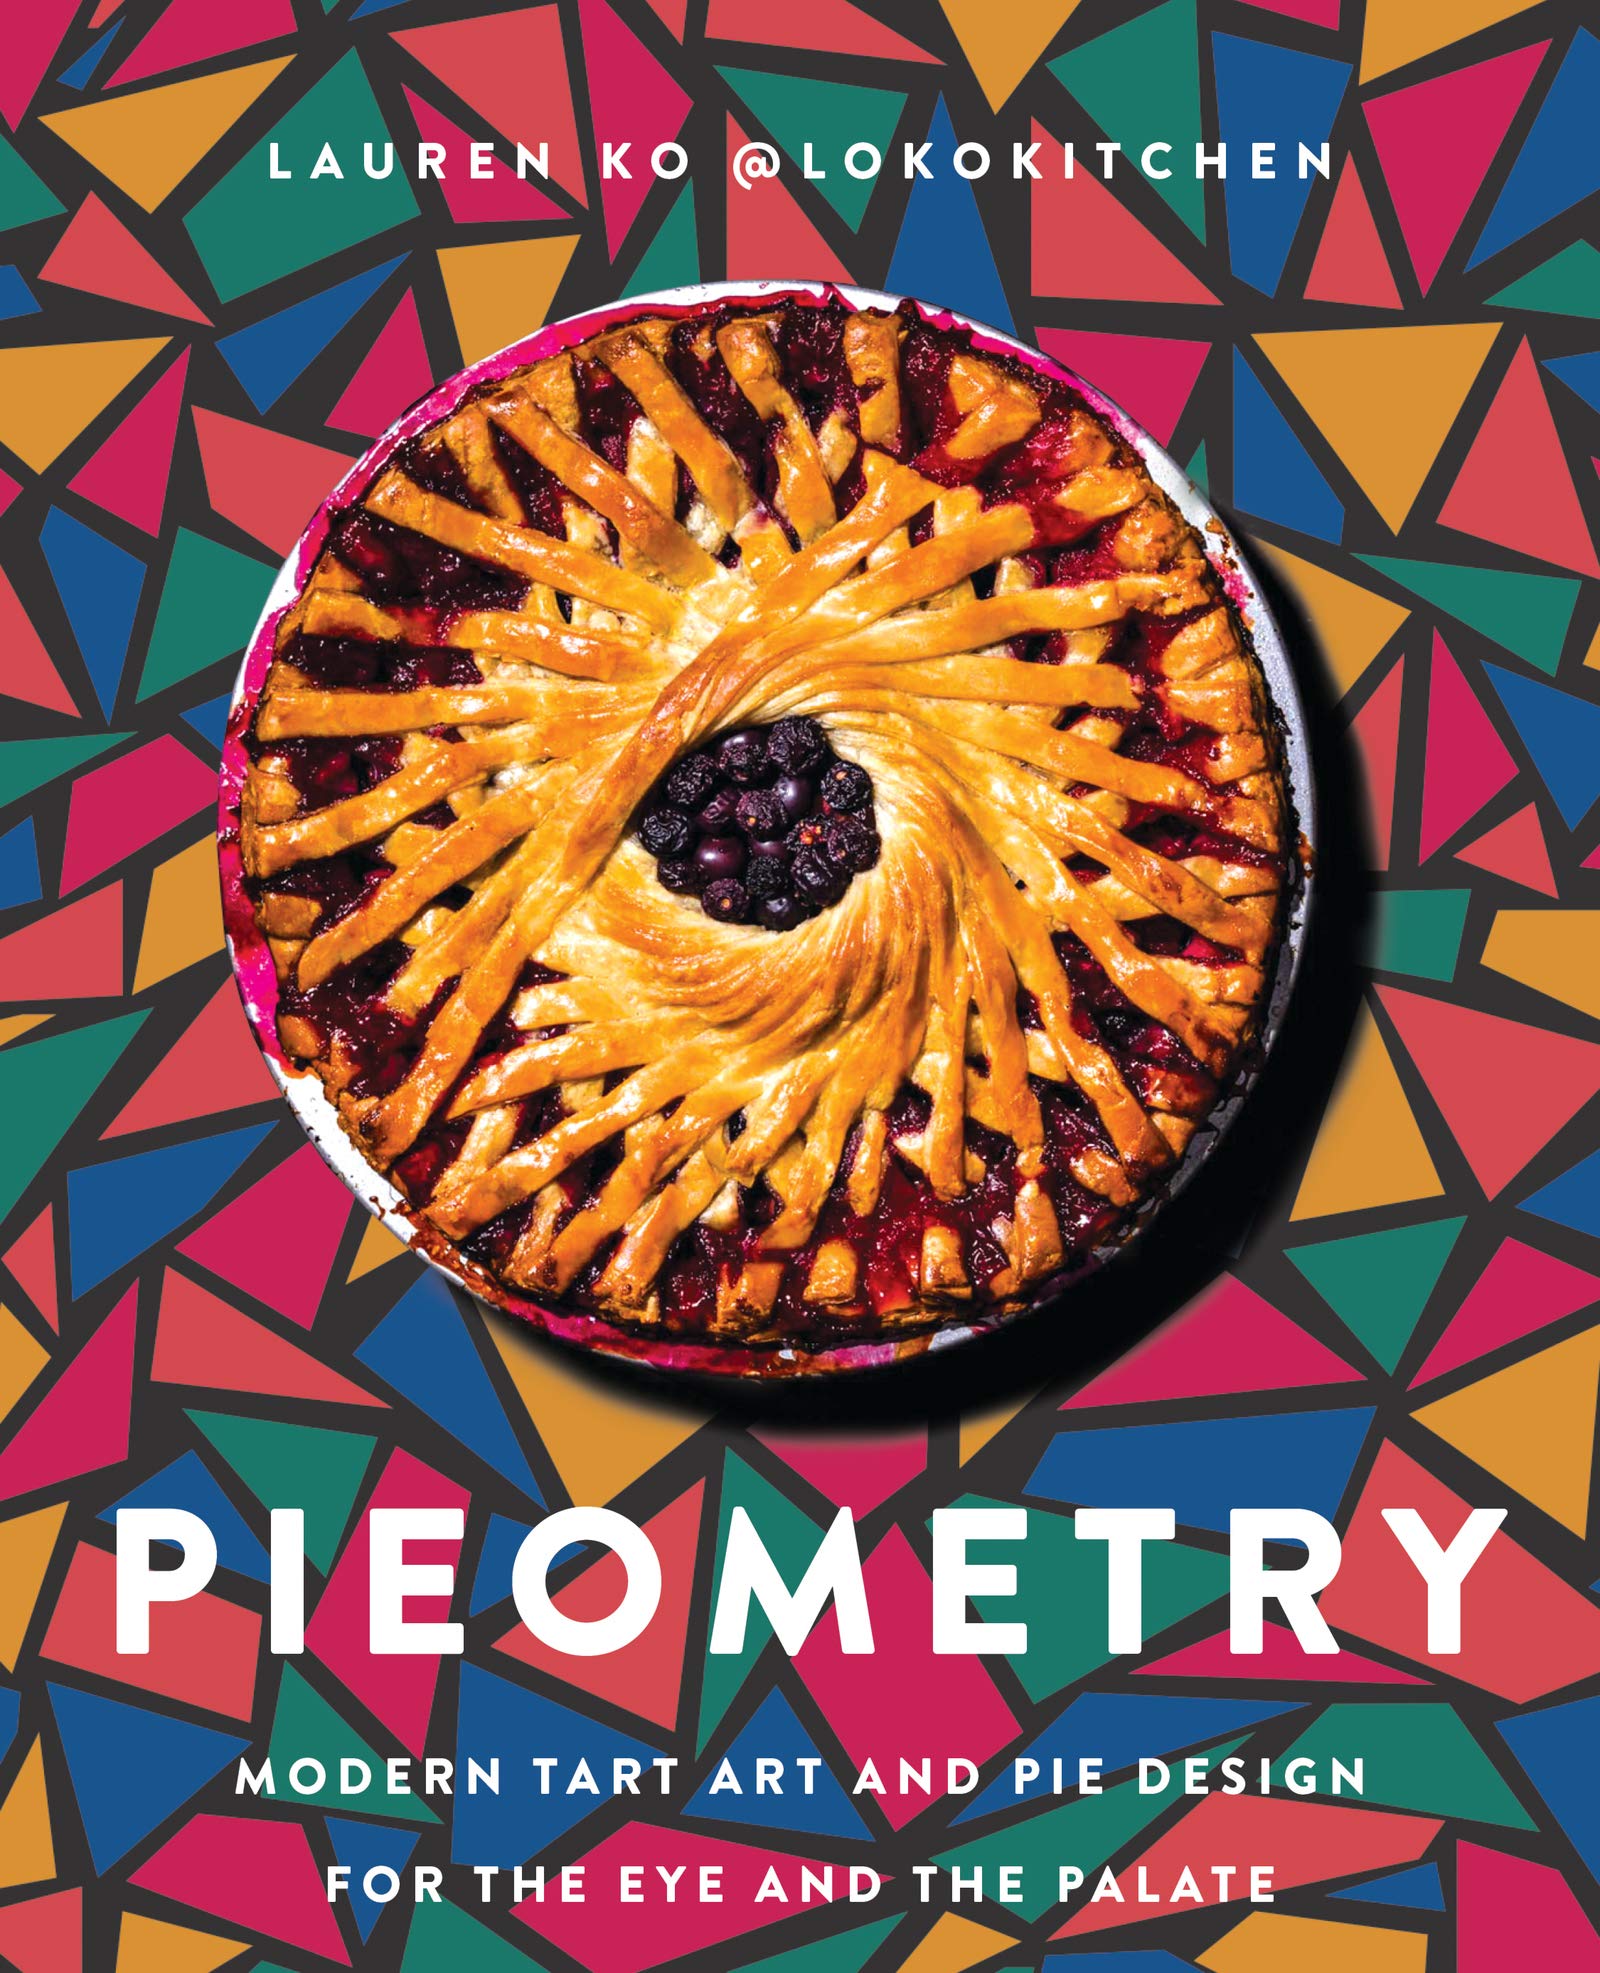 Pieometry: Modern Tart Art and Pie Design for the Eye and the Palate (Lauren Ko)